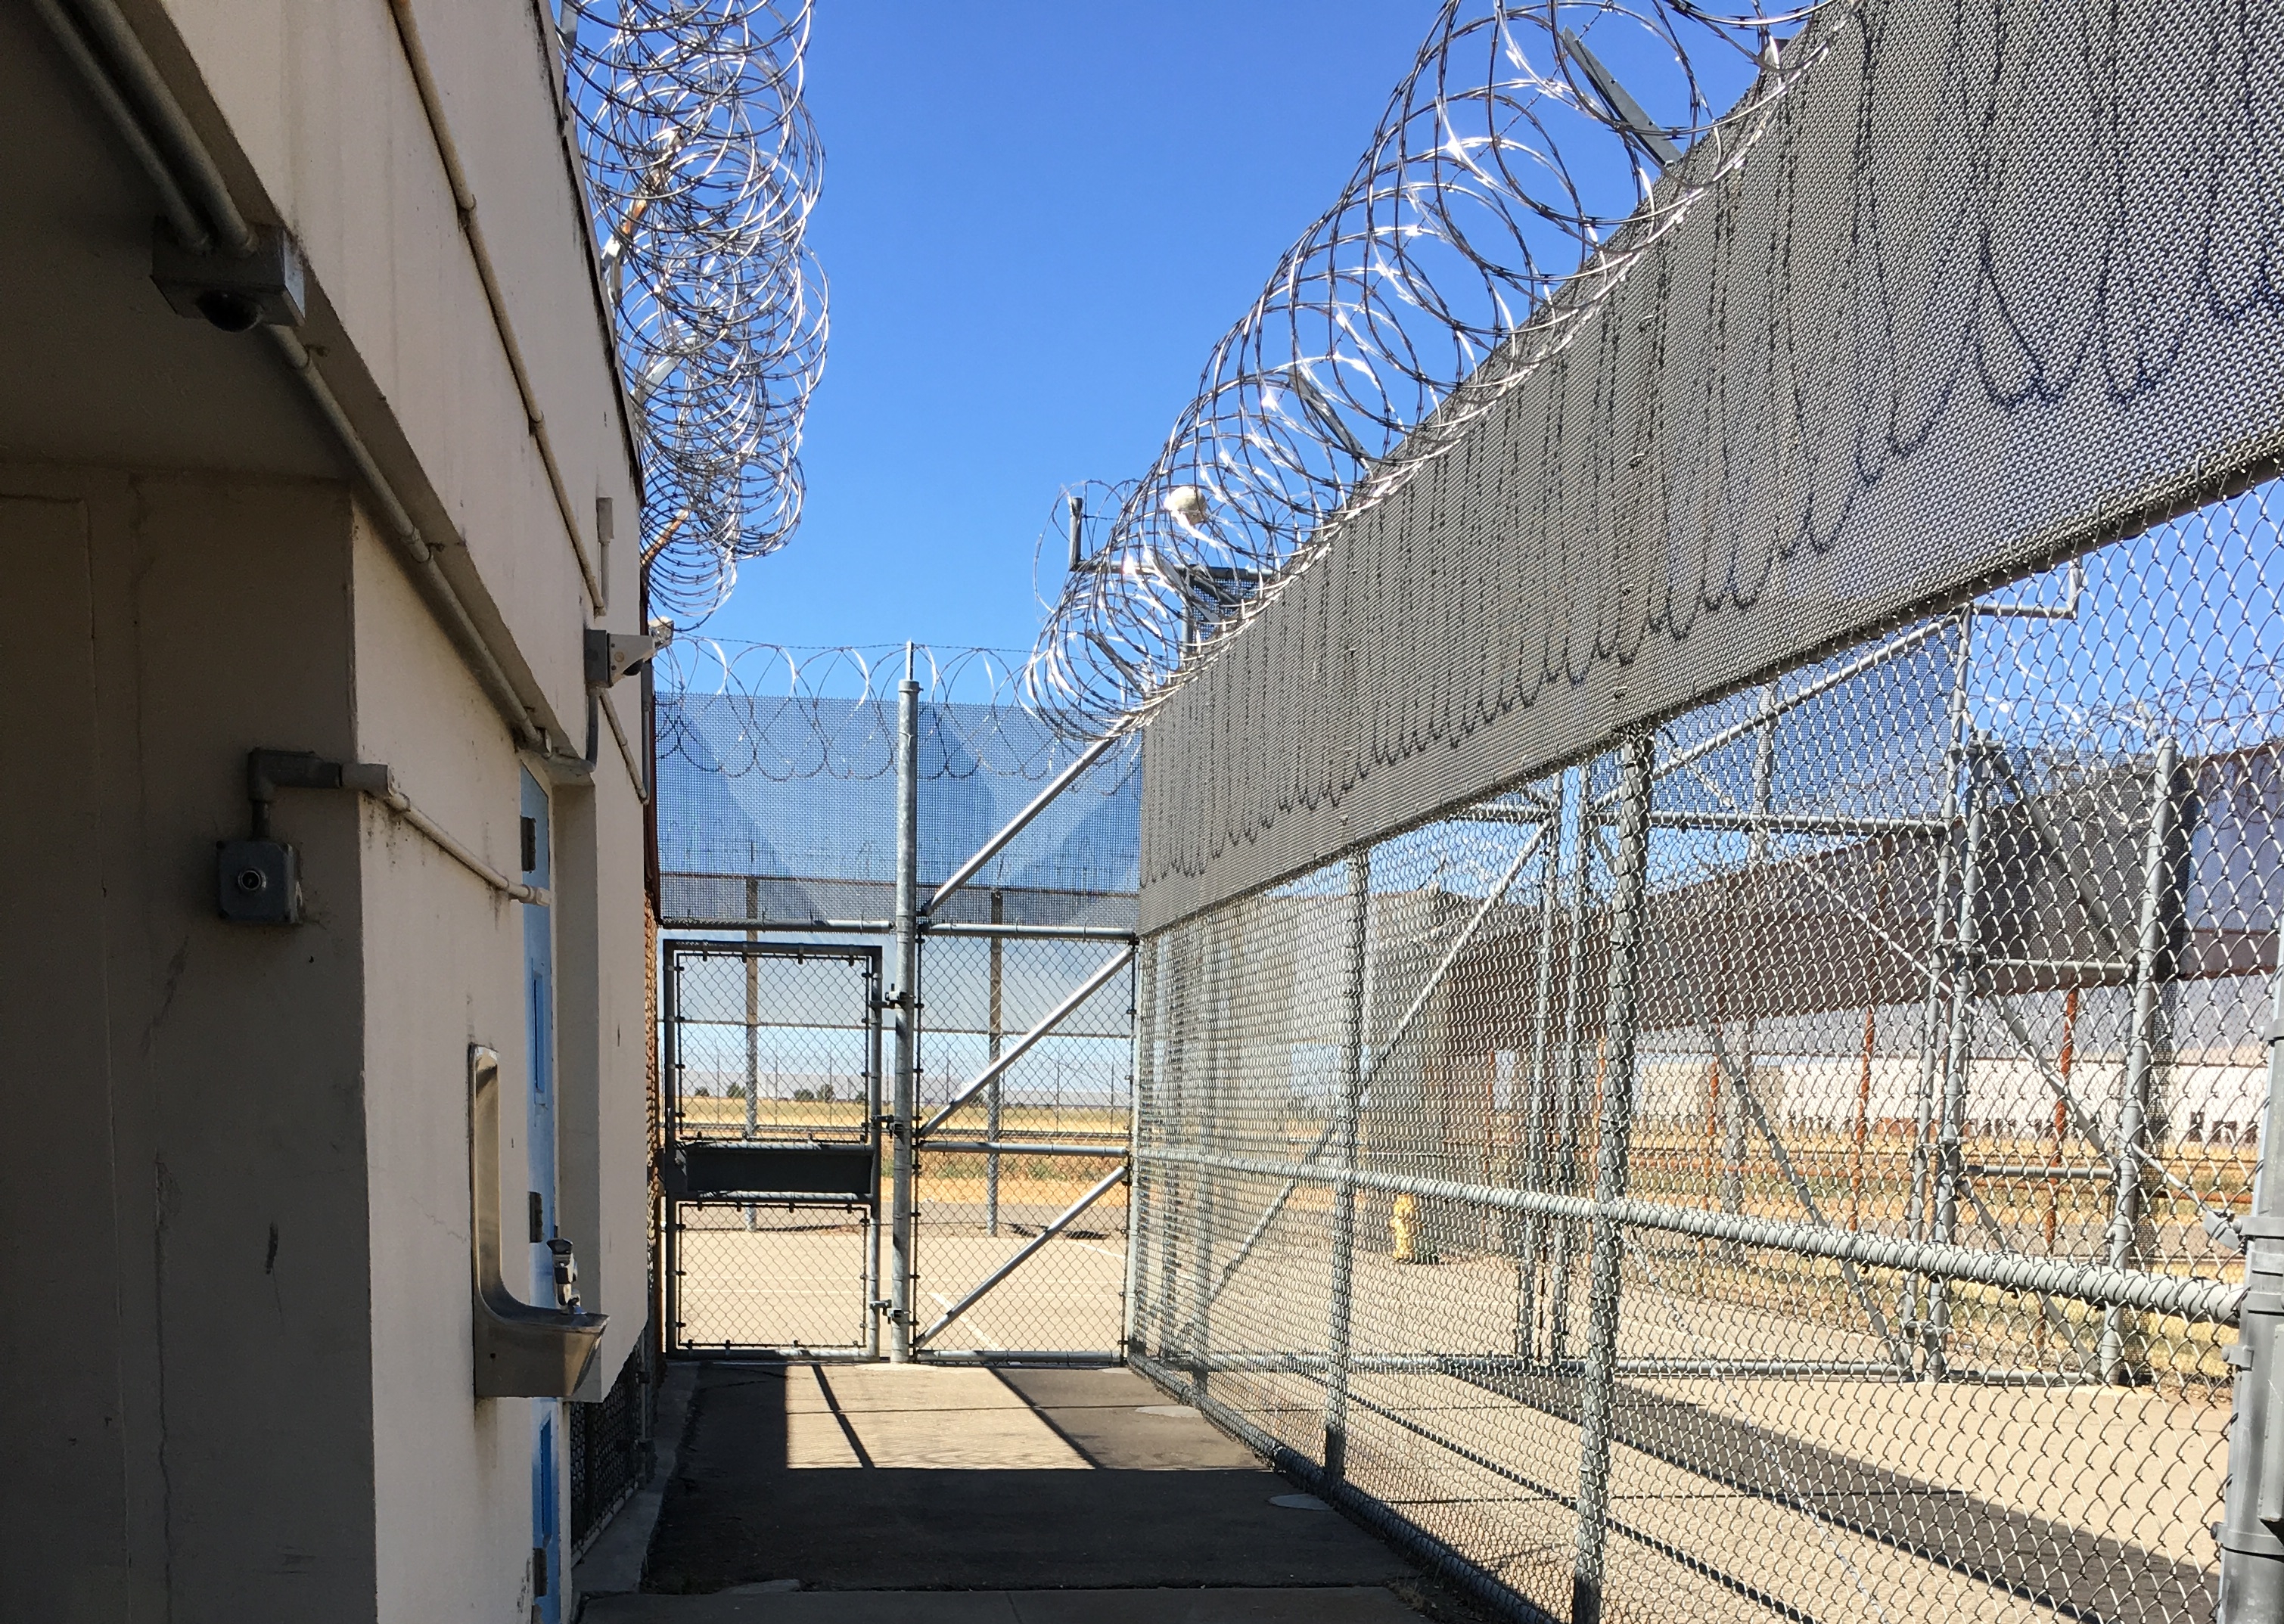 Razor wire fences surround O.H. Close, a DJJ youth correctional facility.